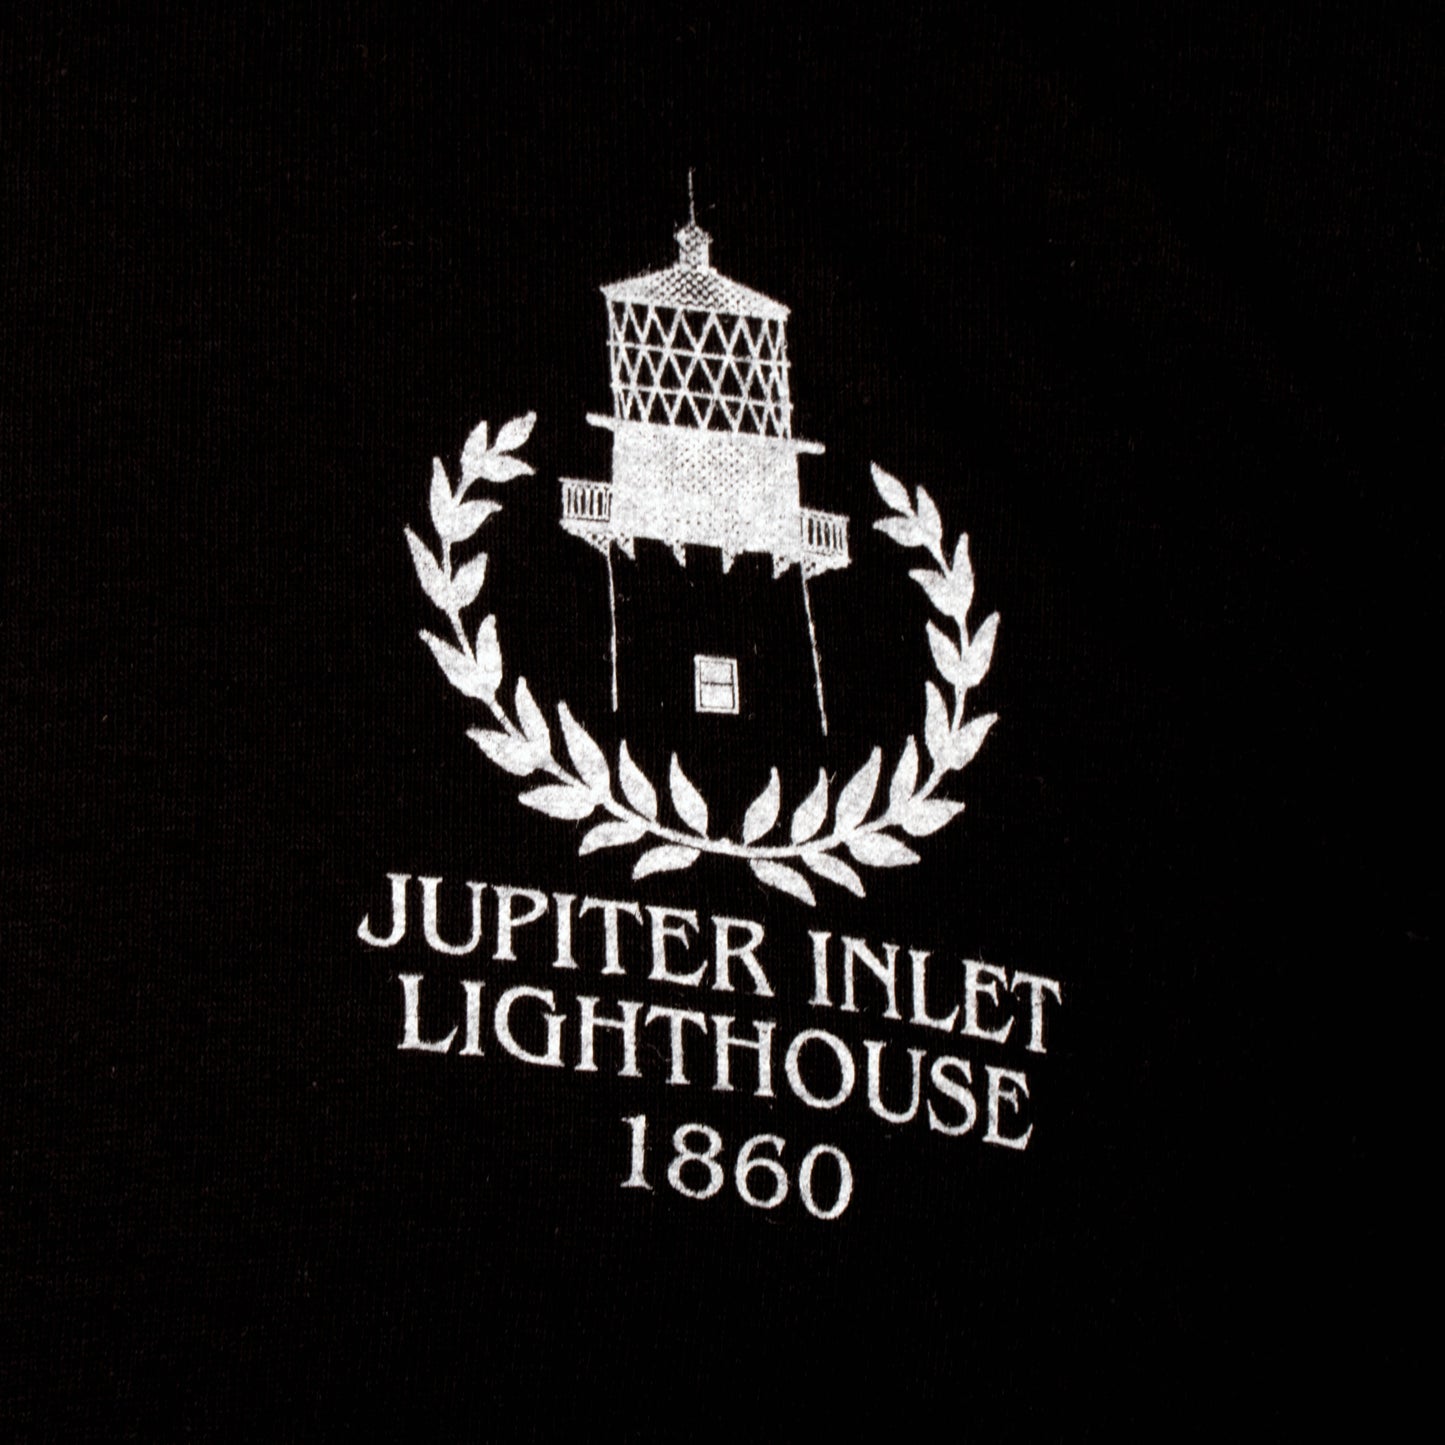 Black Lighthouse Plan T-Shirt